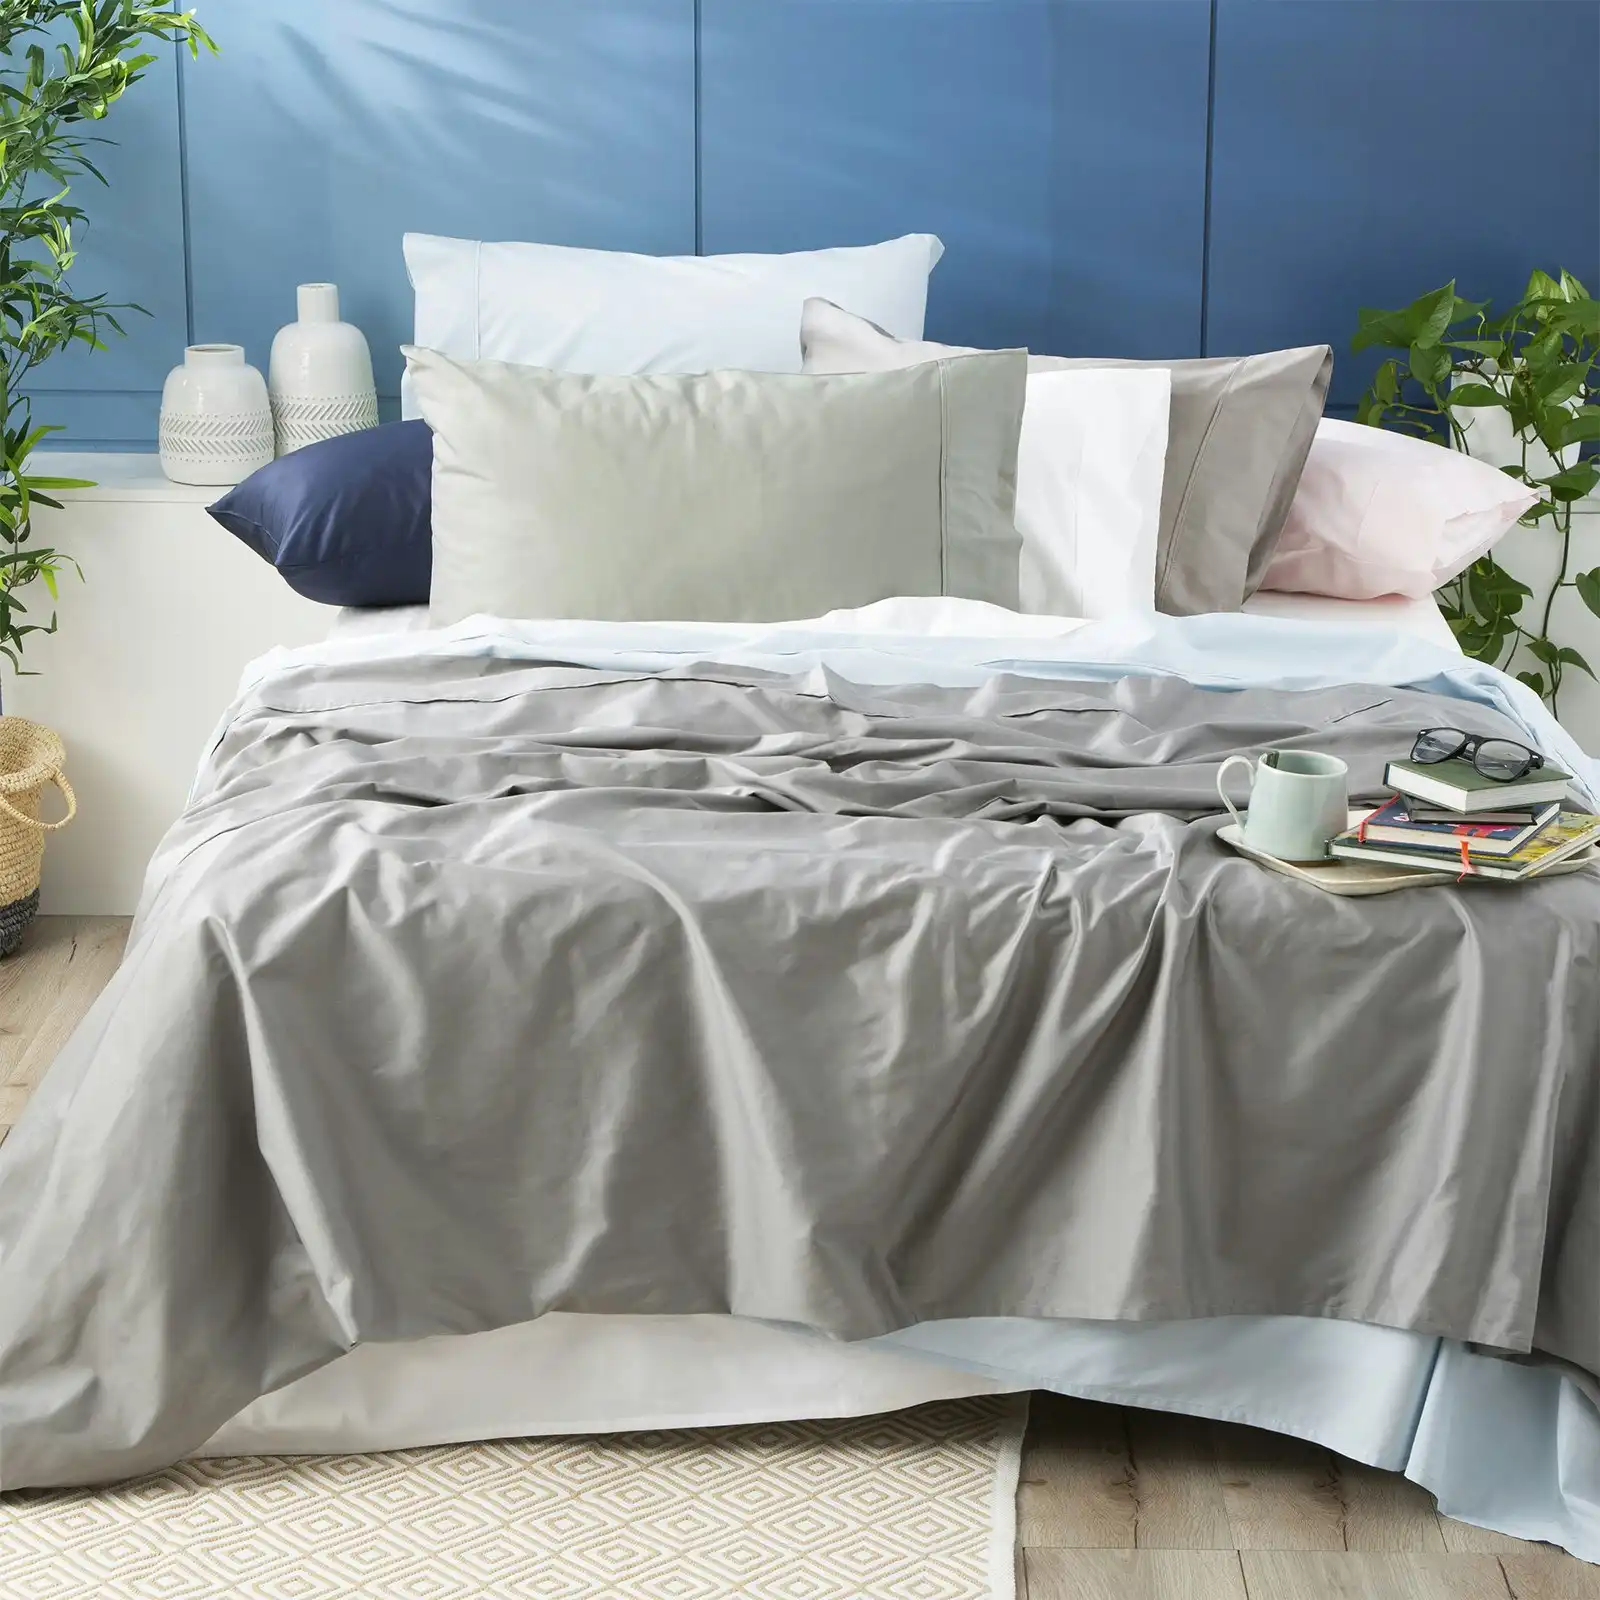 Park Avenue Mega Queen Bed Sheet/Pillowcases 500TC Bamboo Cotton Bedding Pewter